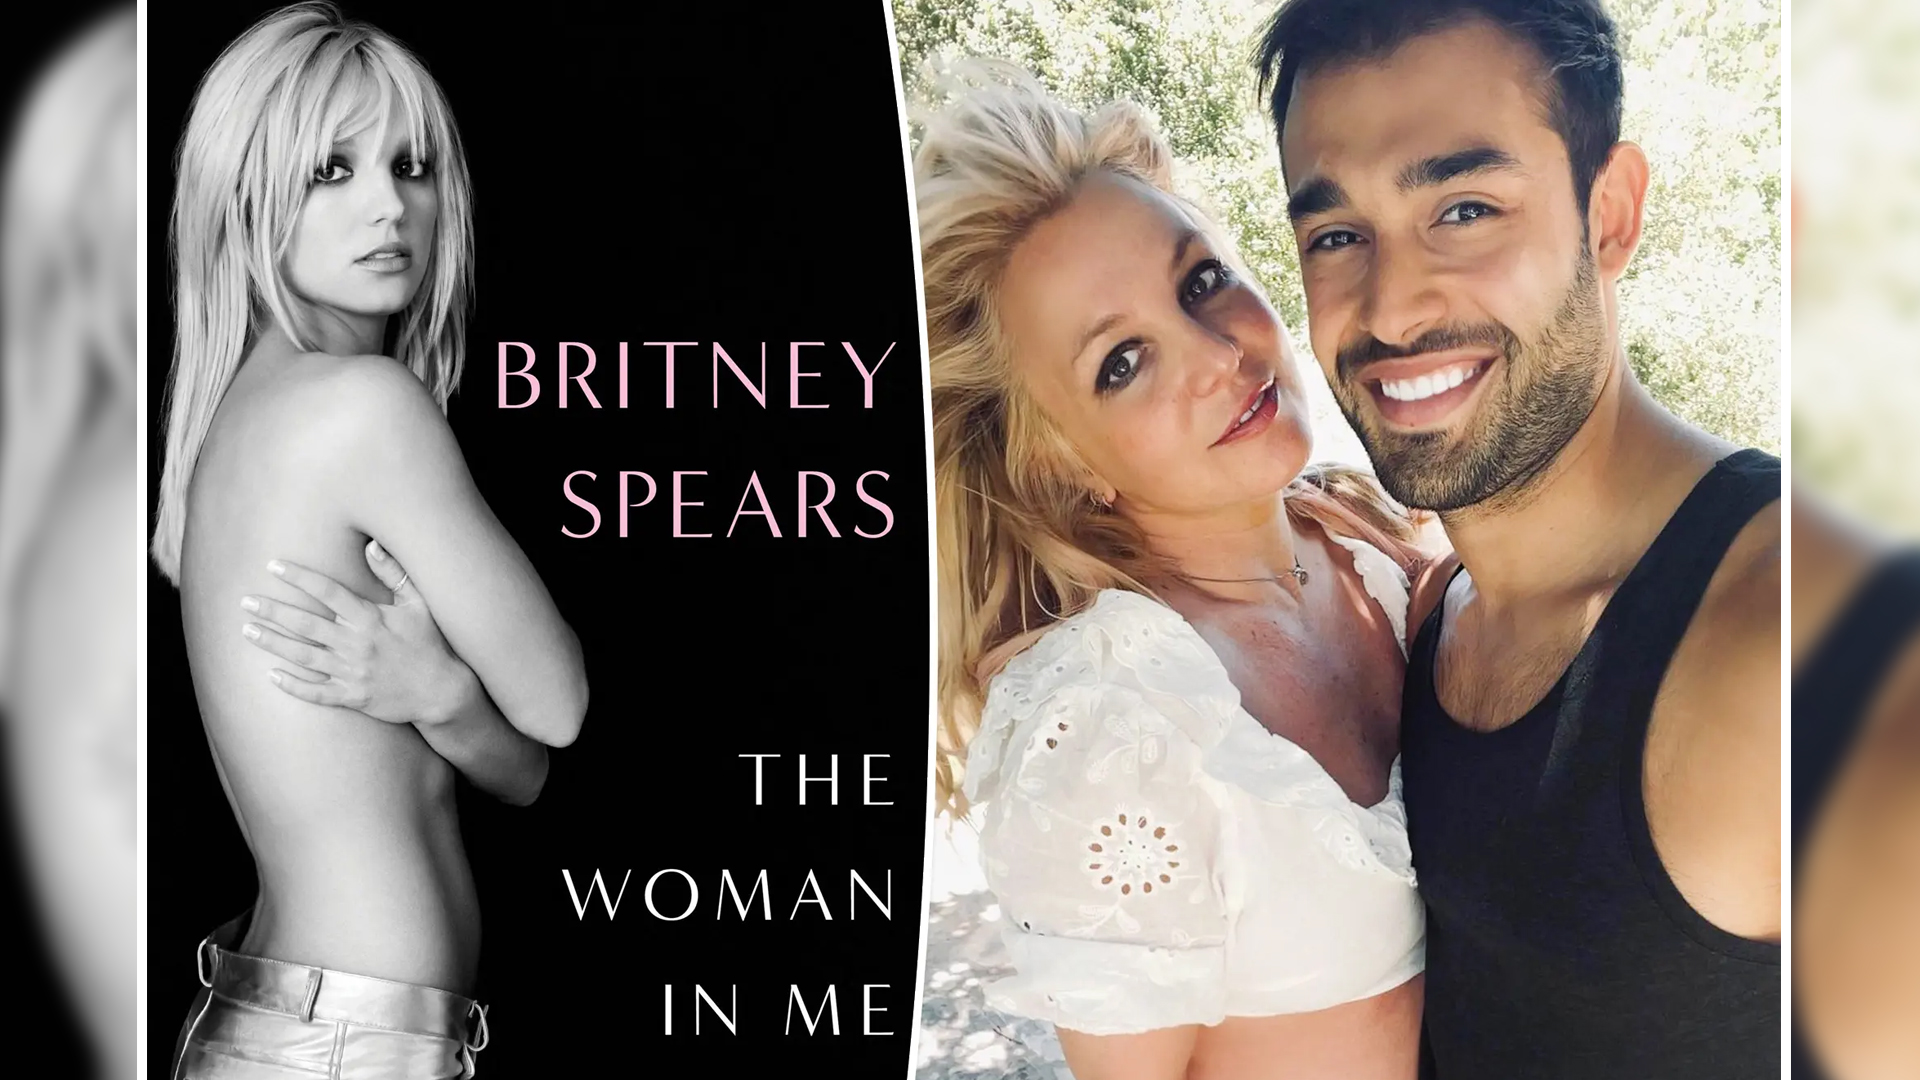 Sam Asghari Response to Britney Spears’ Book!